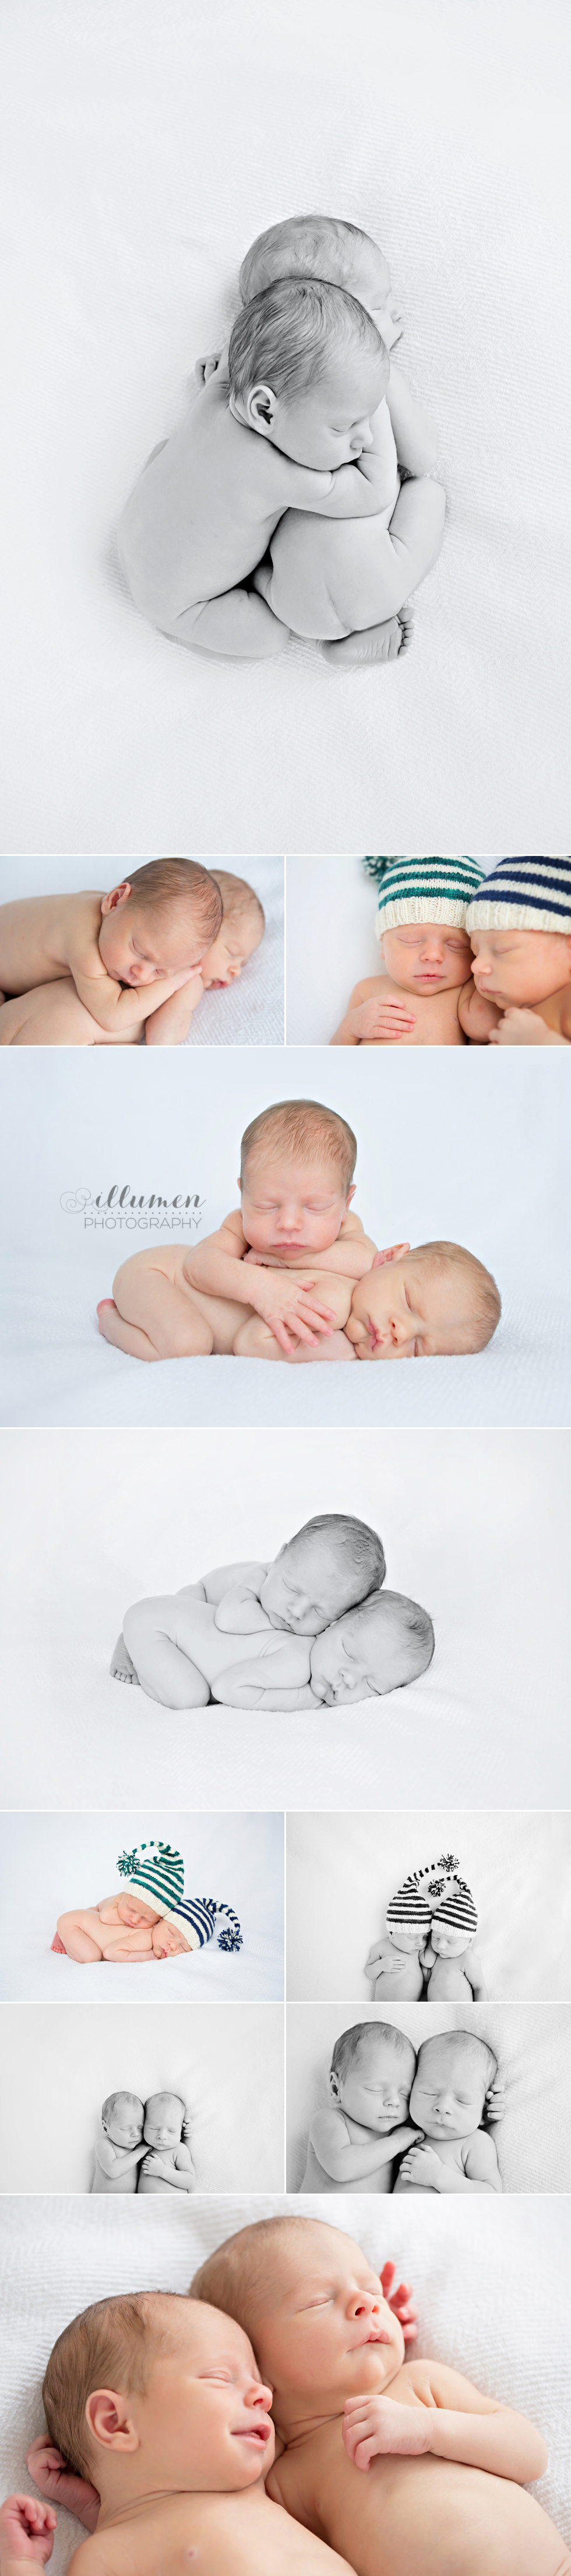 St. Louis Newborn Photography; Twin Newborns; Crestwood, Missouri, Illumen Photography; www.illumenphotography.com